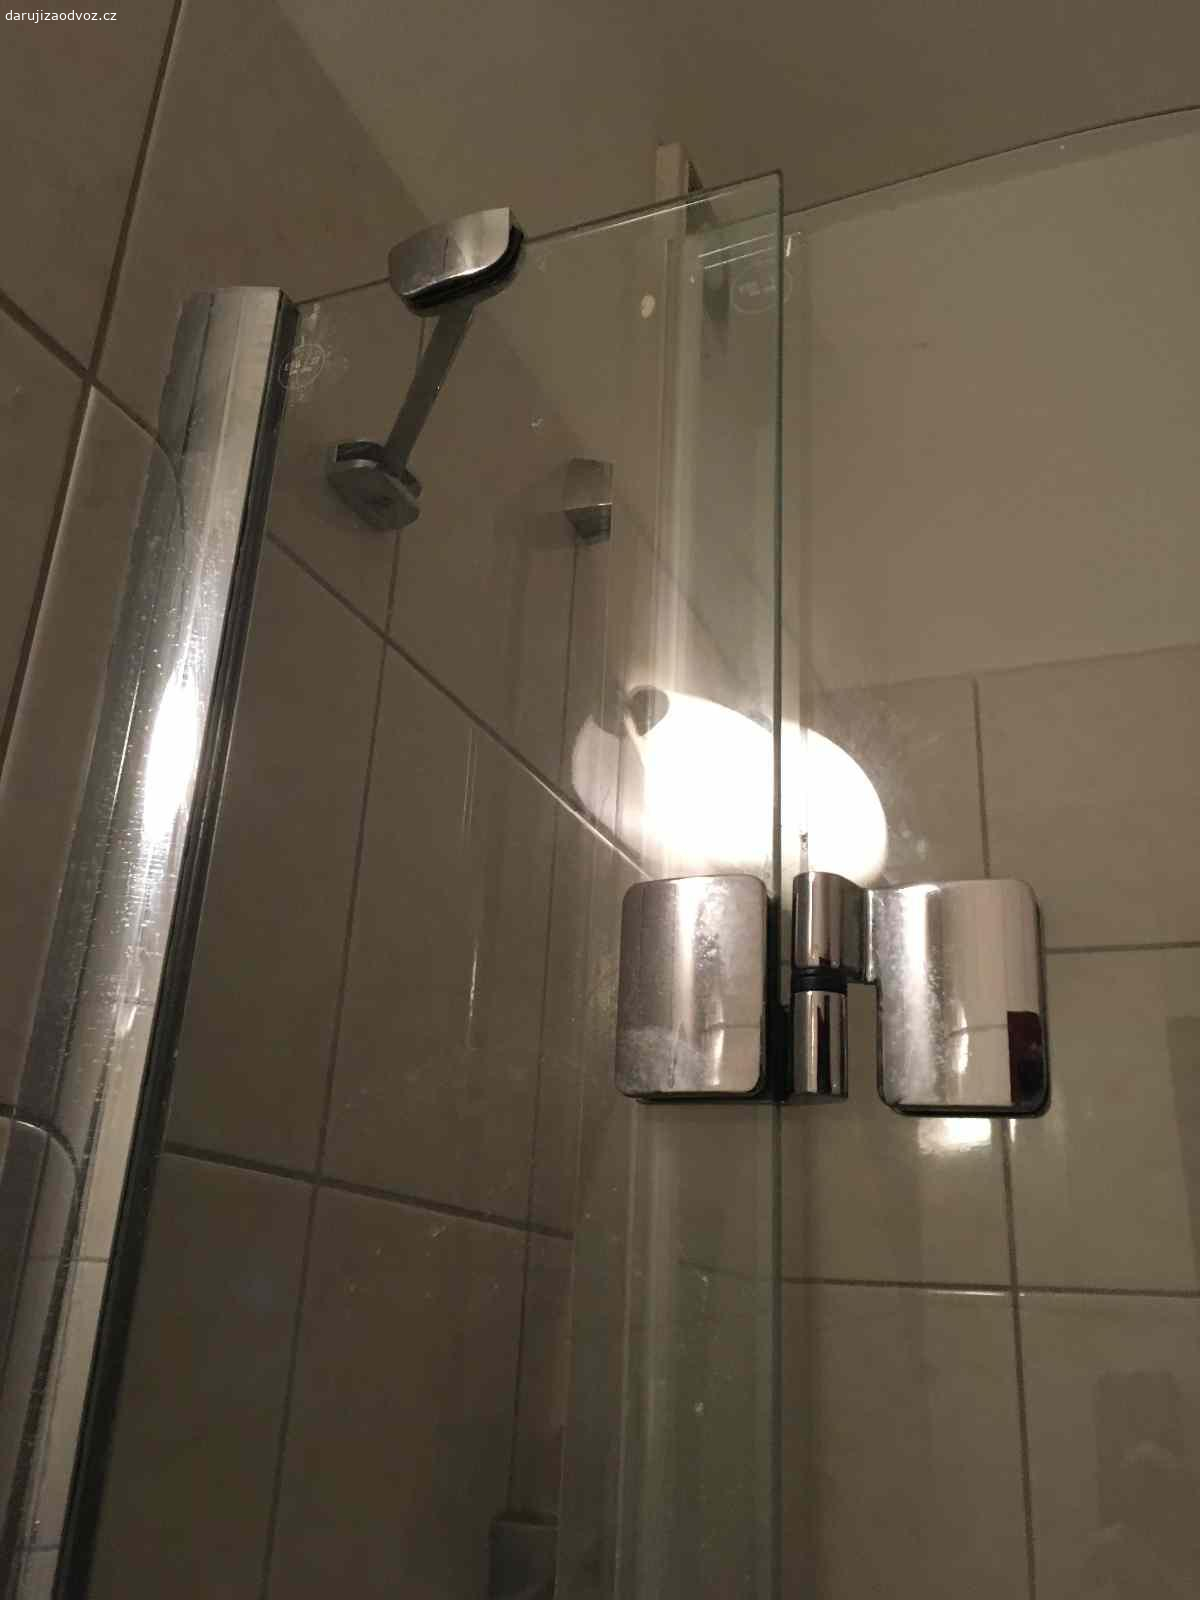 Daruji sprchovy kout. Daruji sprchovy kout, vanicka plus dvoukridle sklenene dvere. Vanicka 75x75 cm.
(Podminkou je vlastni vybourani a odvoz :-)